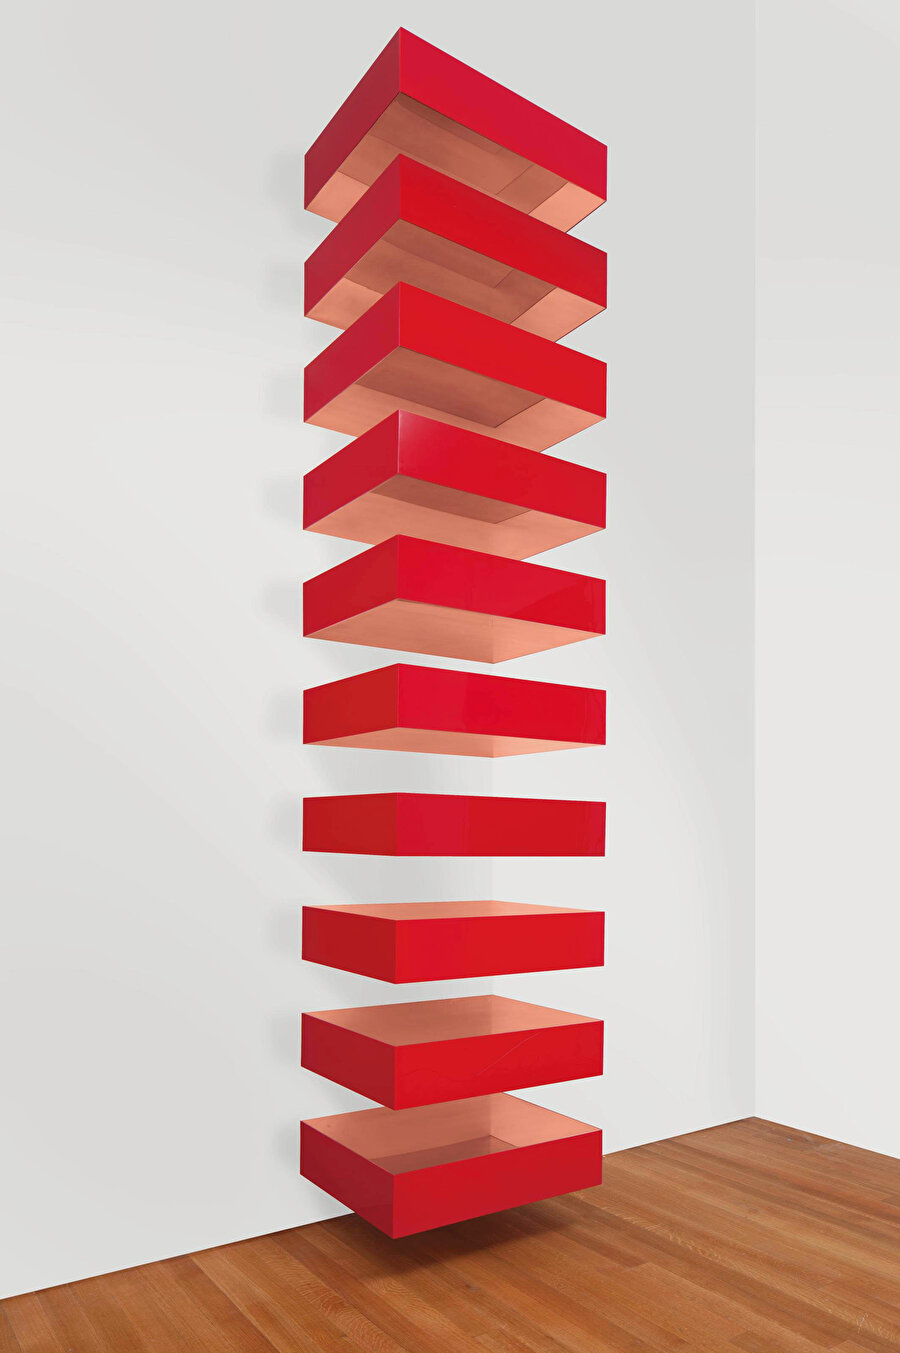 Donald Judd, “İsimsiz”-“Untitled”, 1989, 10 tane parlak kırmızı kutu.